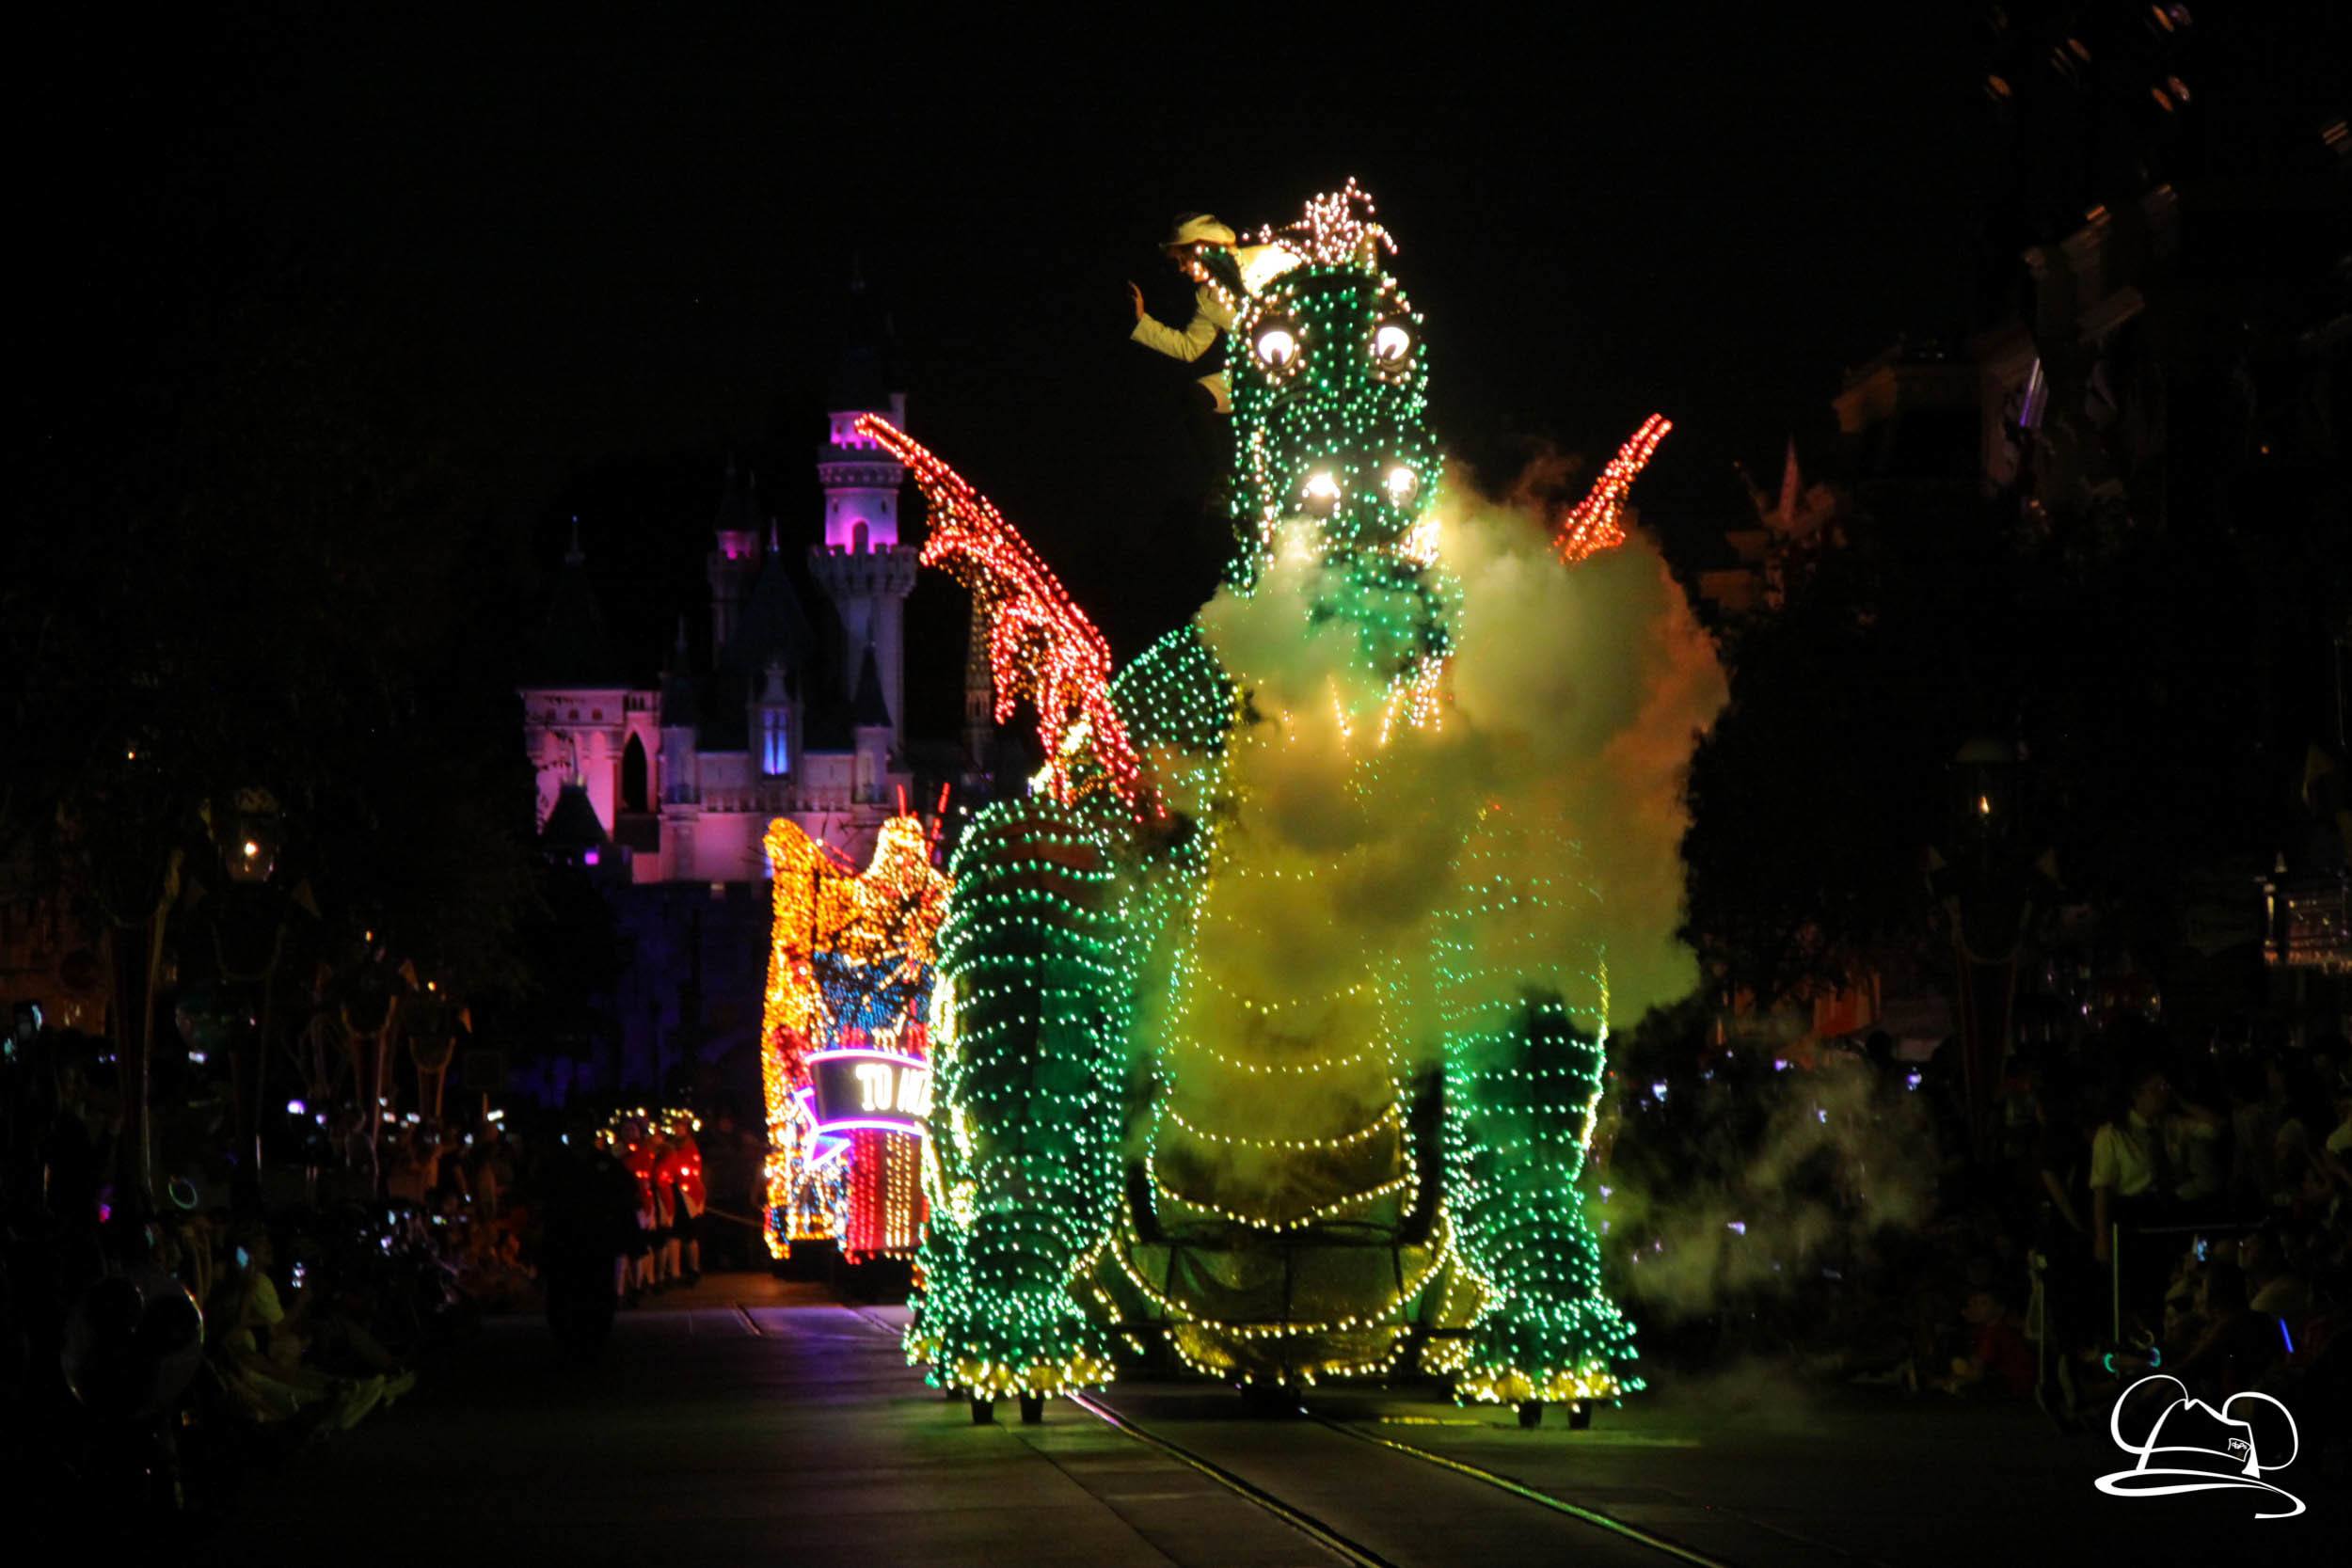 Main Street Electrical Parade Celebrates 45 Years of Nighttime Disney Magic!